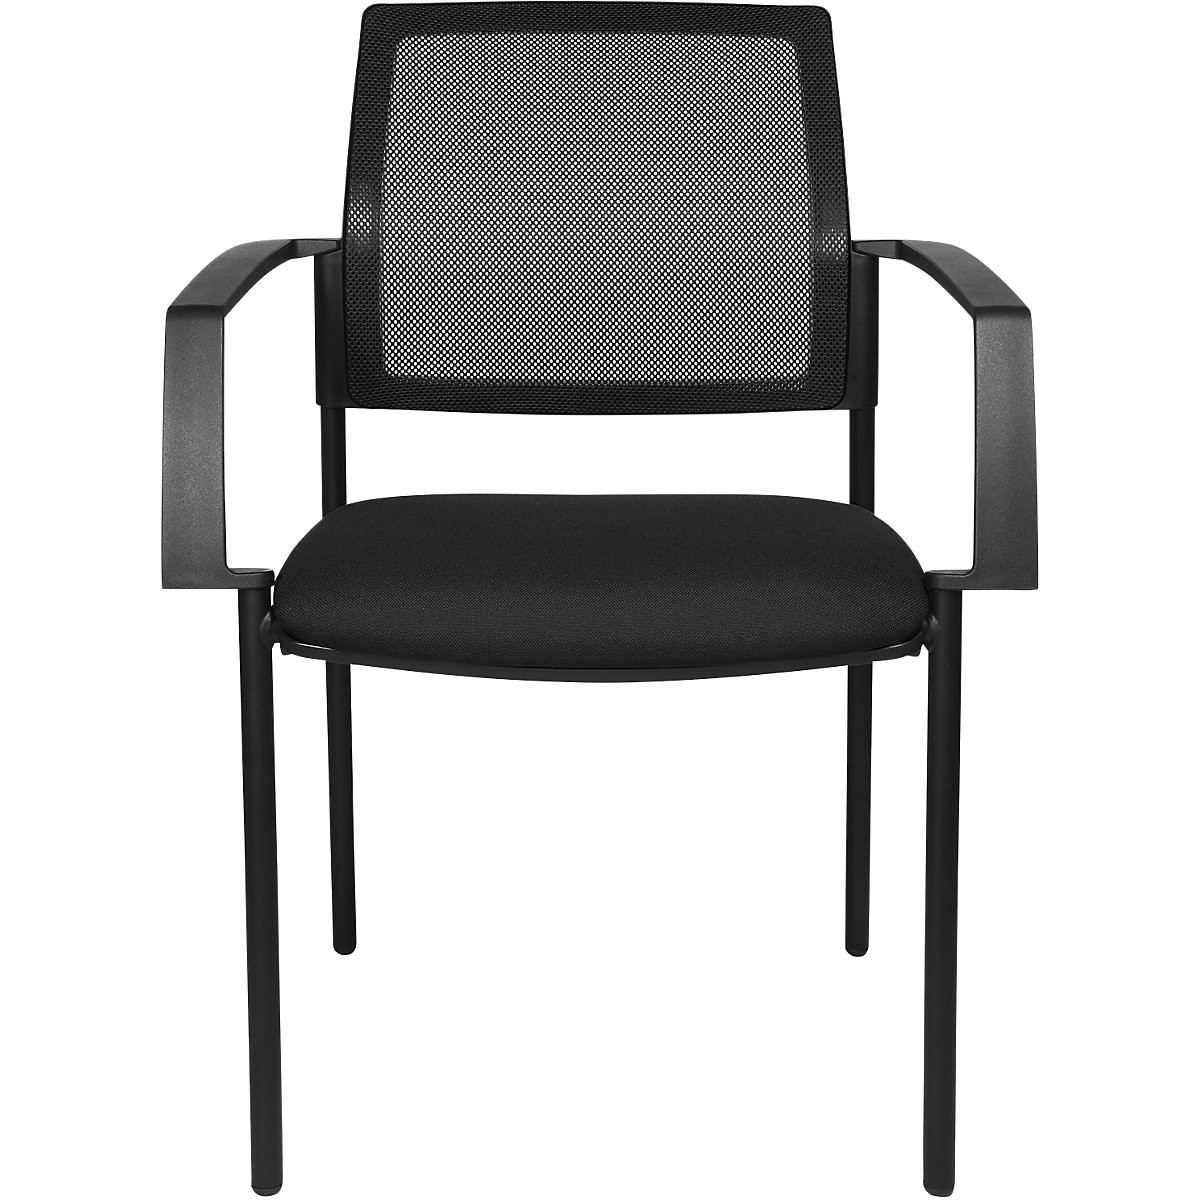 Mesh stacking chair – Topstar